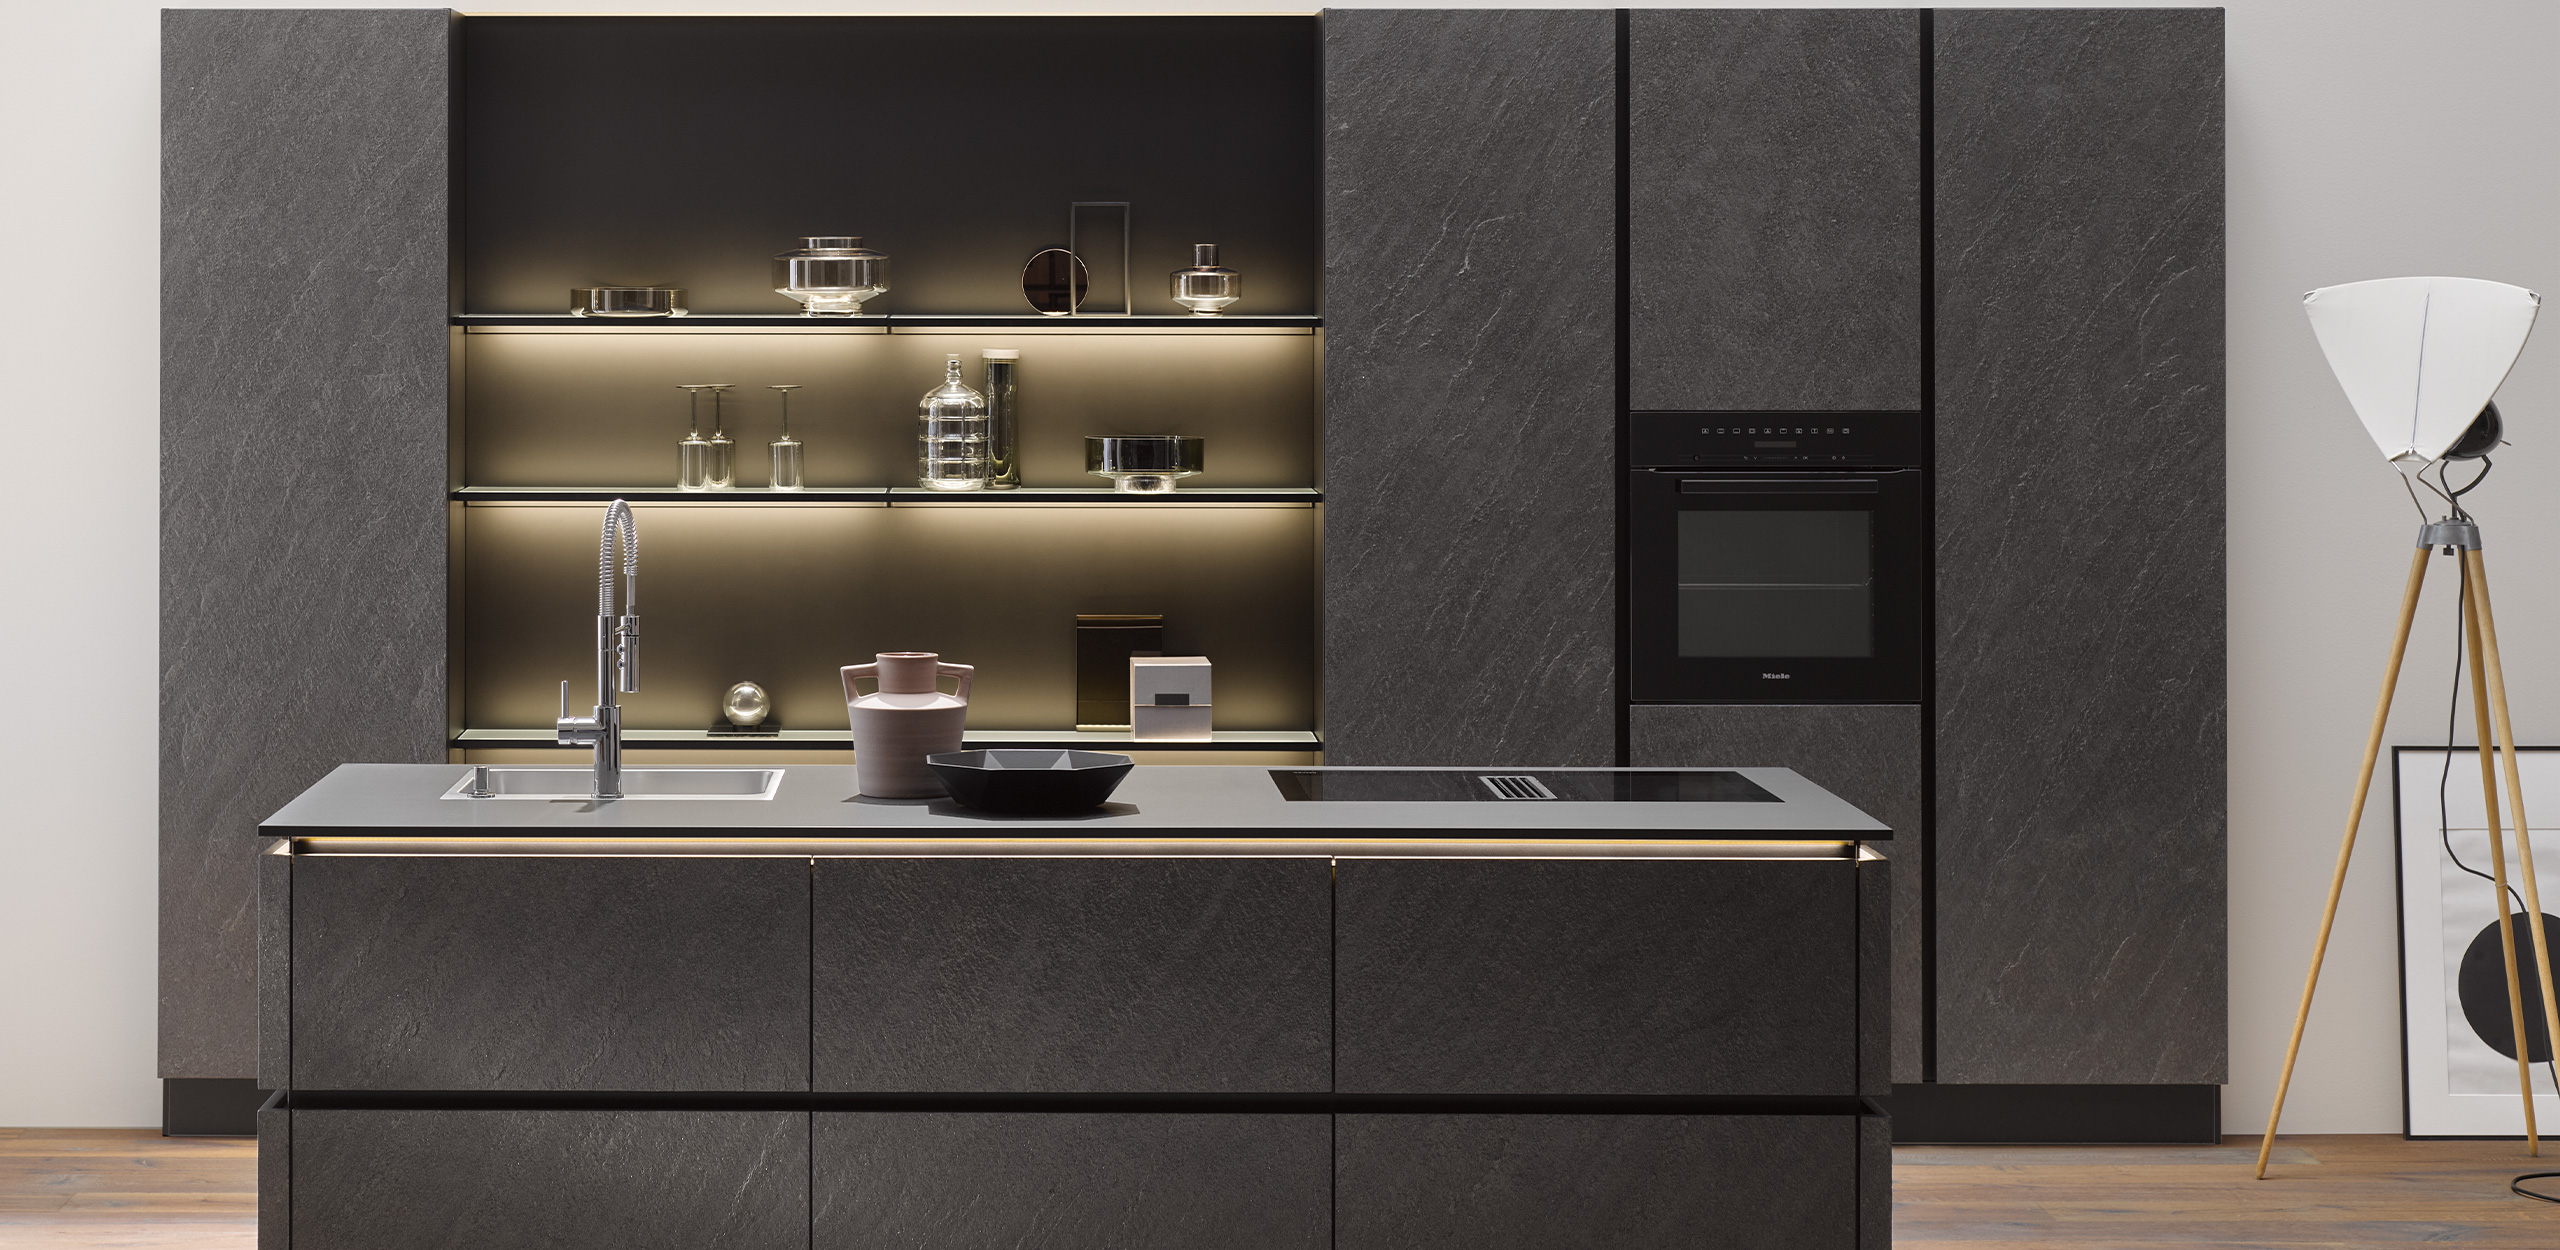 Image of the AV 7030-GL Black Star AV 2042 Dark Walnut kitchen with island and tall cabinet wall